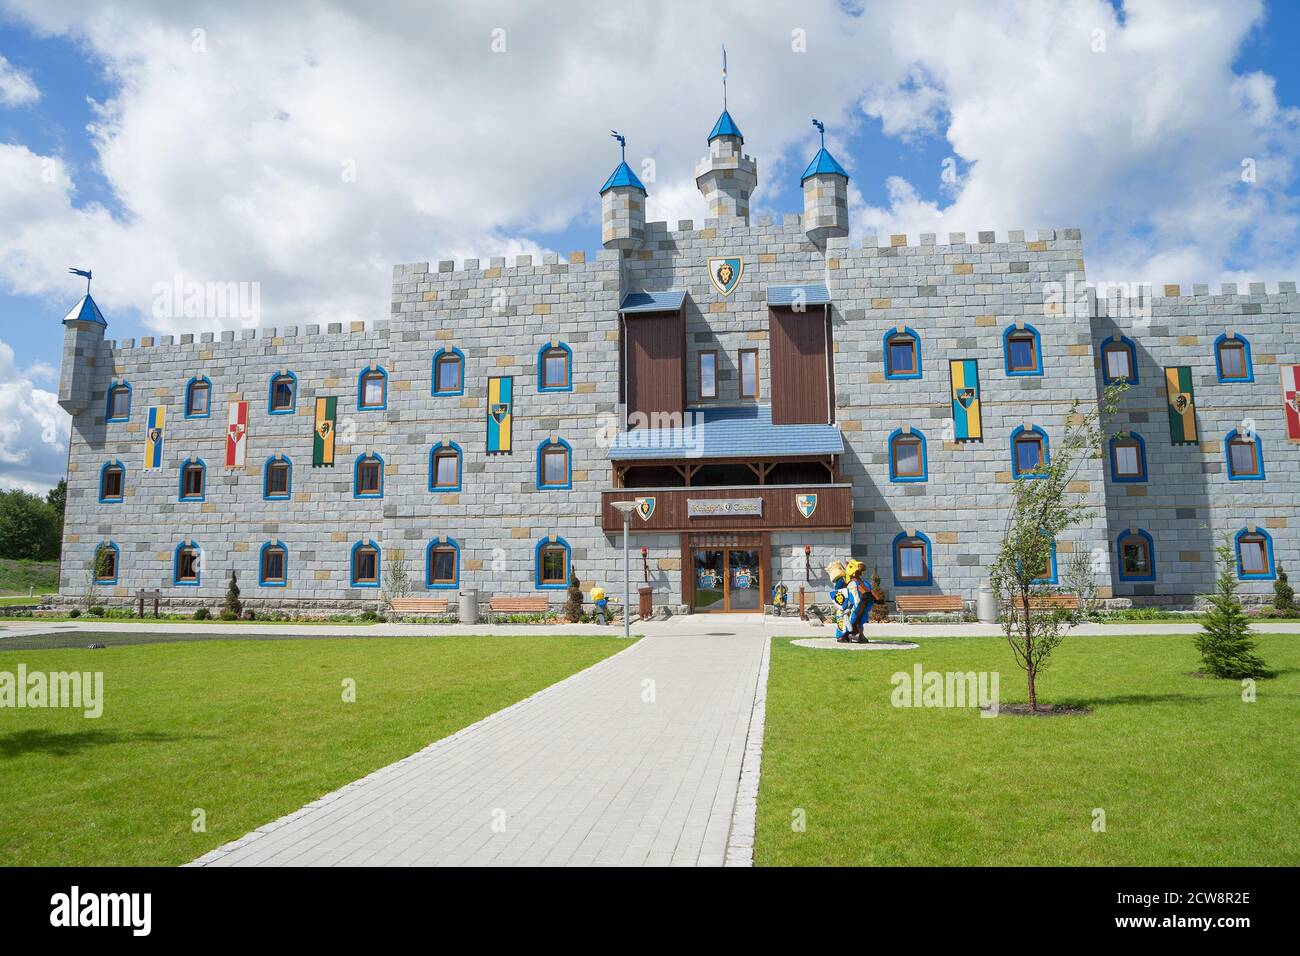 Legoland Castle Hotel, Billund, Denmark. Copy space. Stock Photo